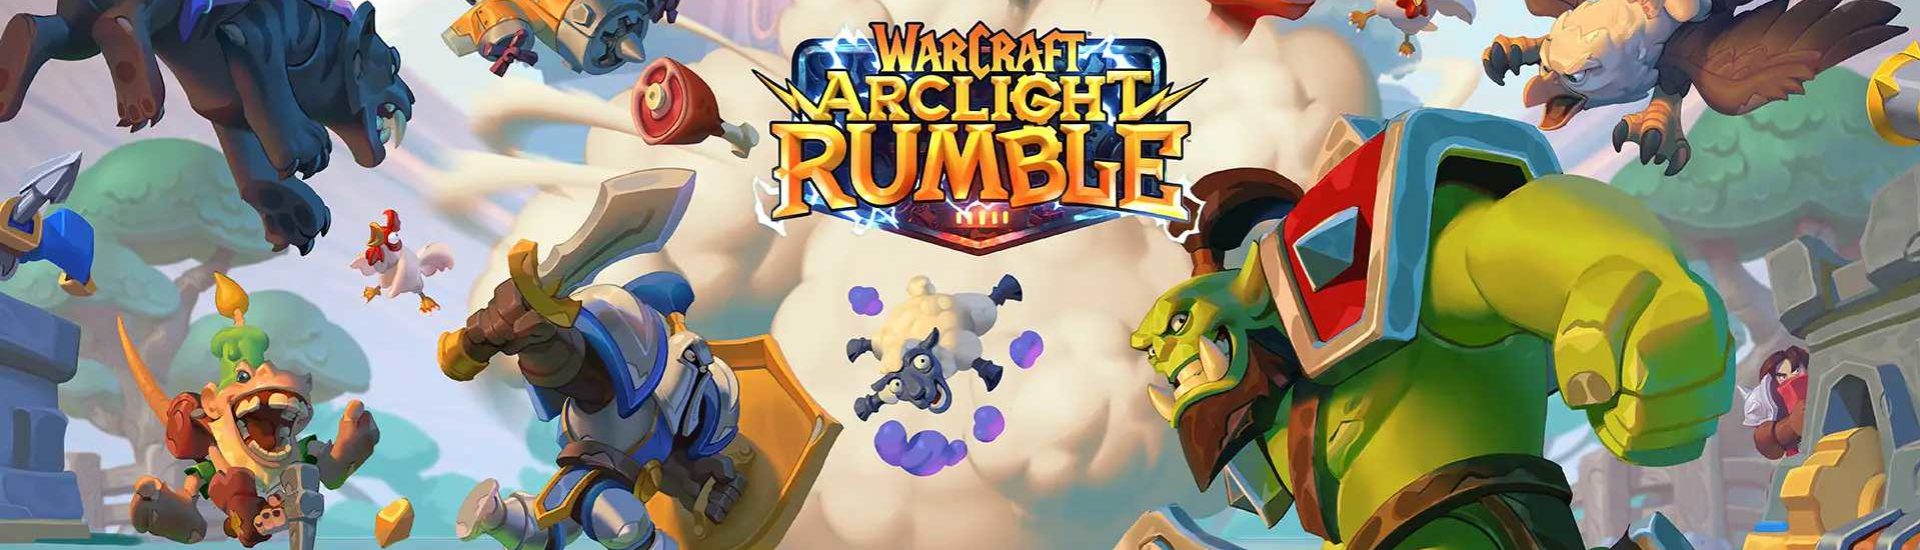 Warcraft Arclight Rumble: Mobile-Strategie-Game angekündigt